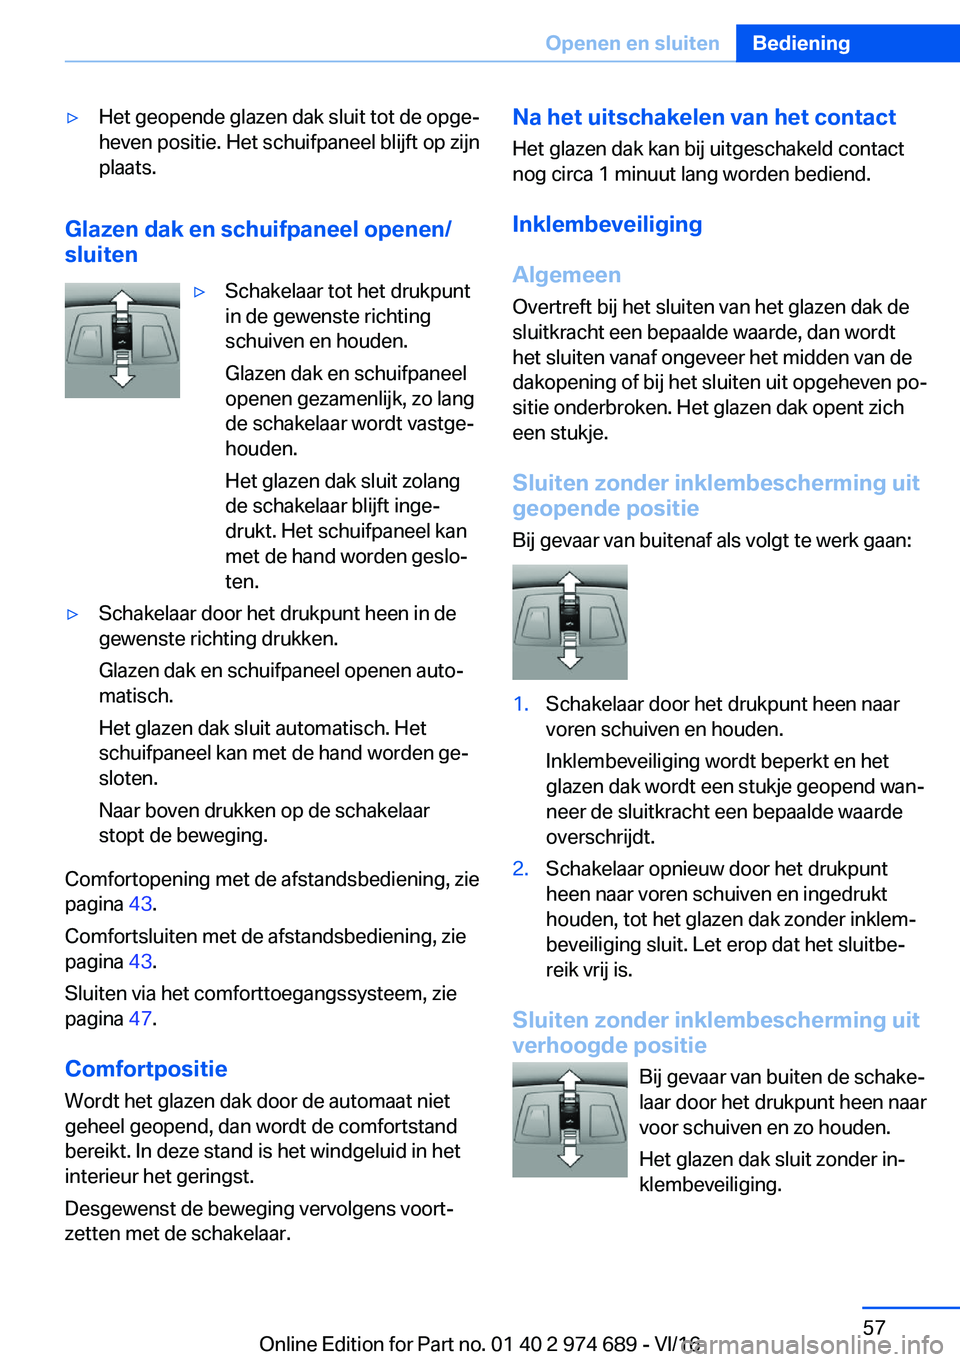 BMW M2 2017  Instructieboekjes (in Dutch) 'y�H�e�t� �g�e�o�p�e�n�d�e� �g�l�a�z�e�n� �d�a�k� �s�l�u�i�t� �t�o�t� �d�e� �o�p�g�ej�h�e�v�e�n� �p�o�s�i�t�i�e�.� �H�e�t� �s�c�h�u�i�f�p�a�n�e�e�l� �b�l�i�j�f�t� �o�p� �z�i�j�n�p�l�a�a�t�s�.
�G�